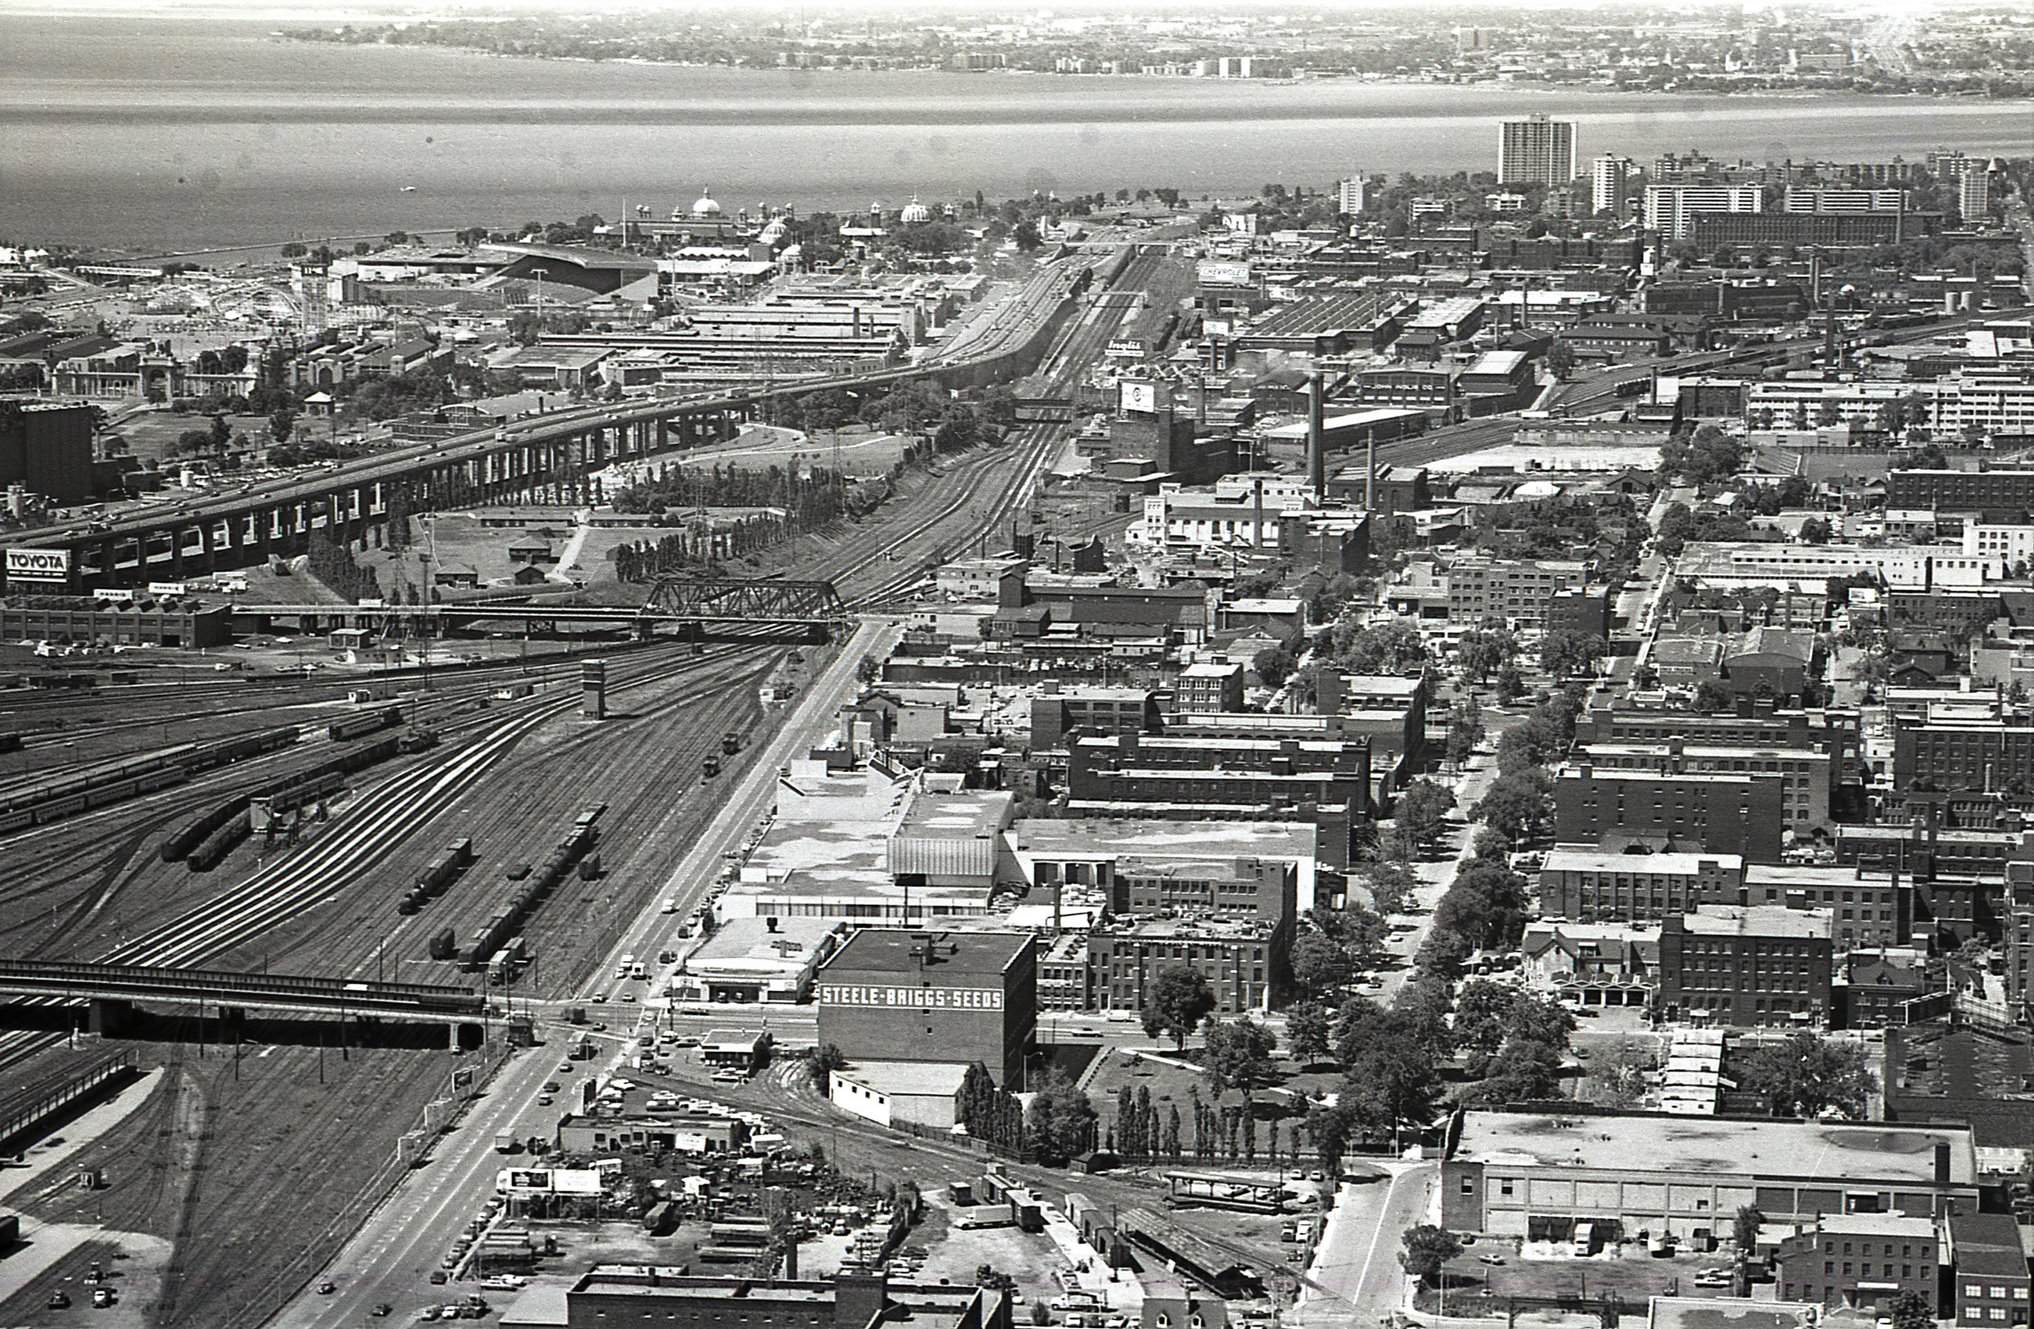 Aerial view looking west, 1960s.